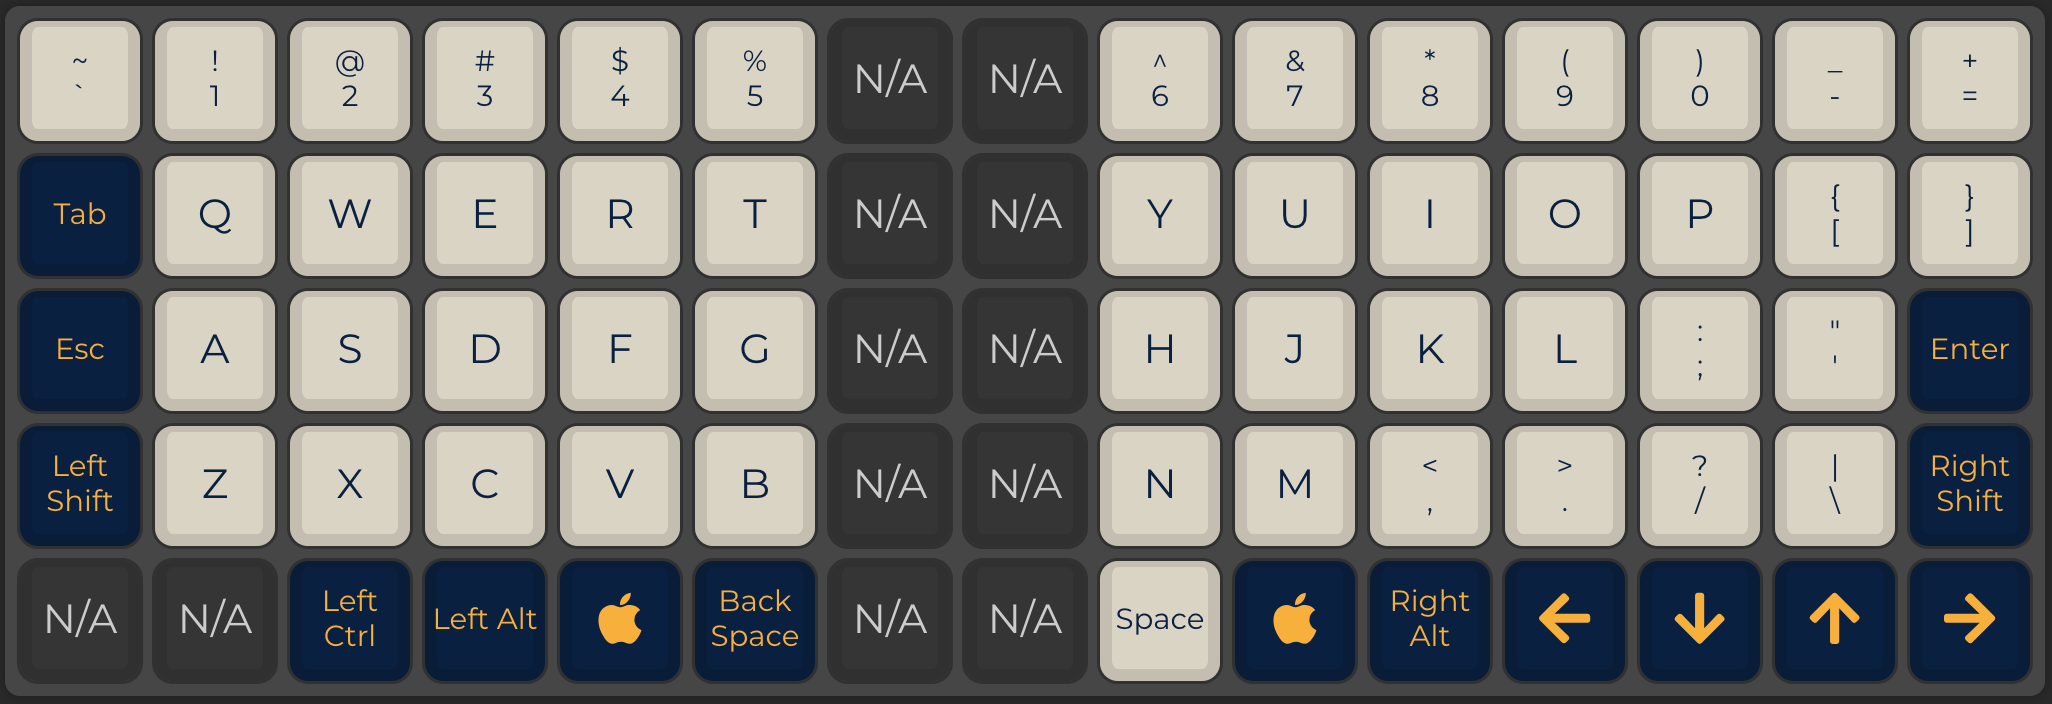 Custom layout for XD75 keyboard